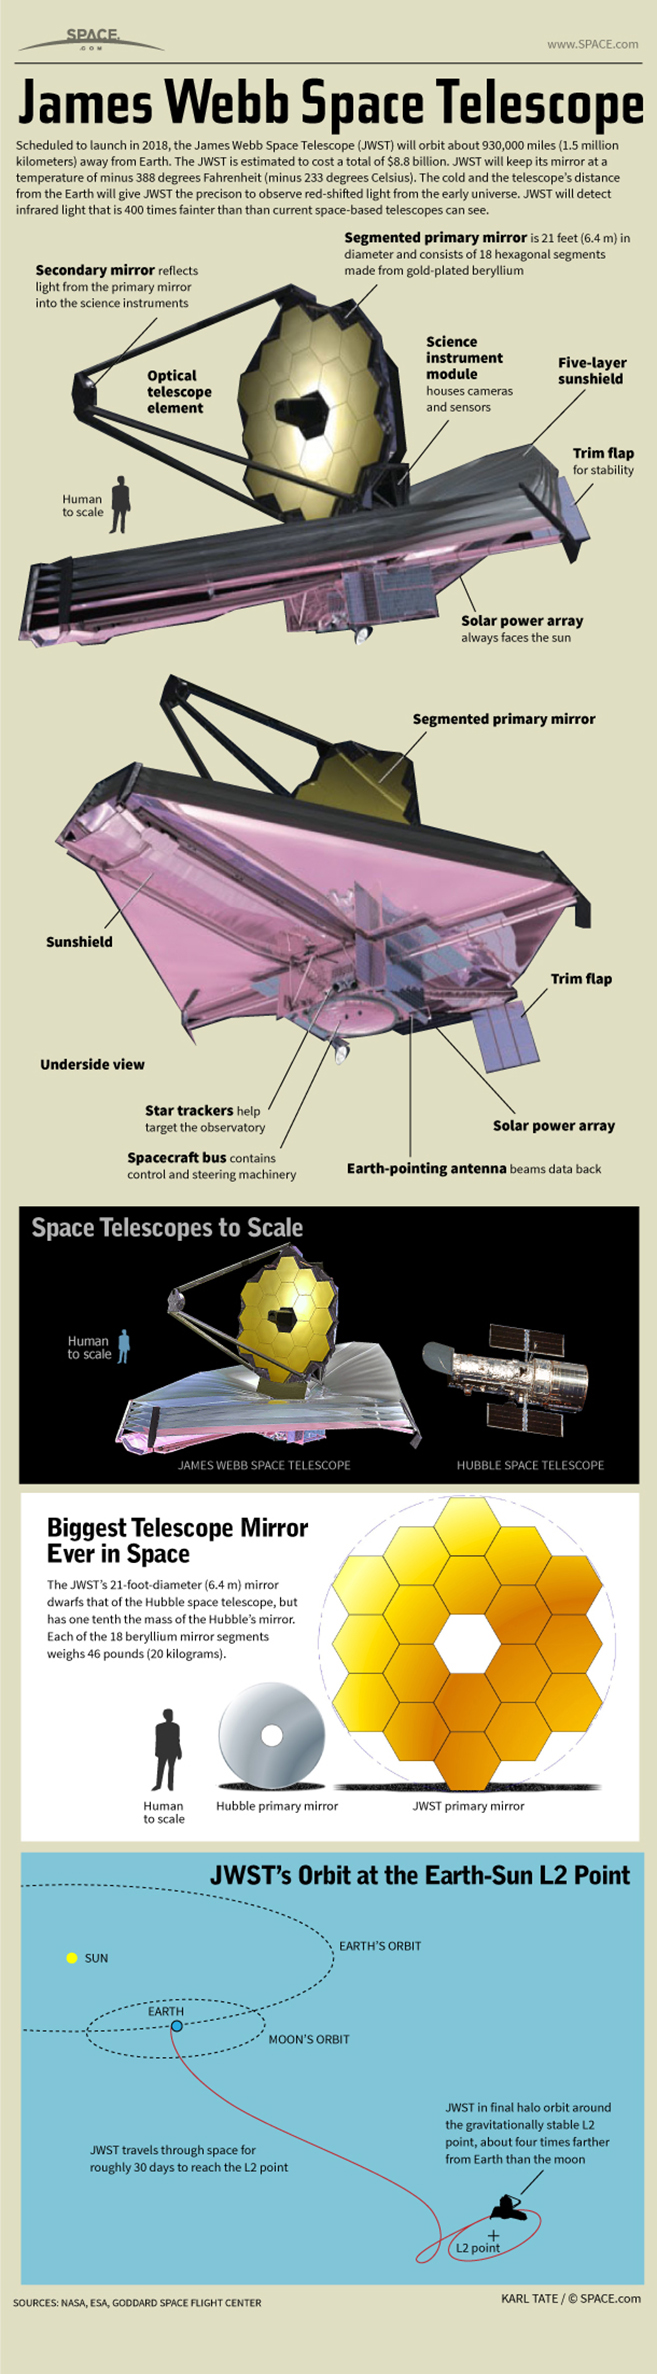 The James Webb Telescope